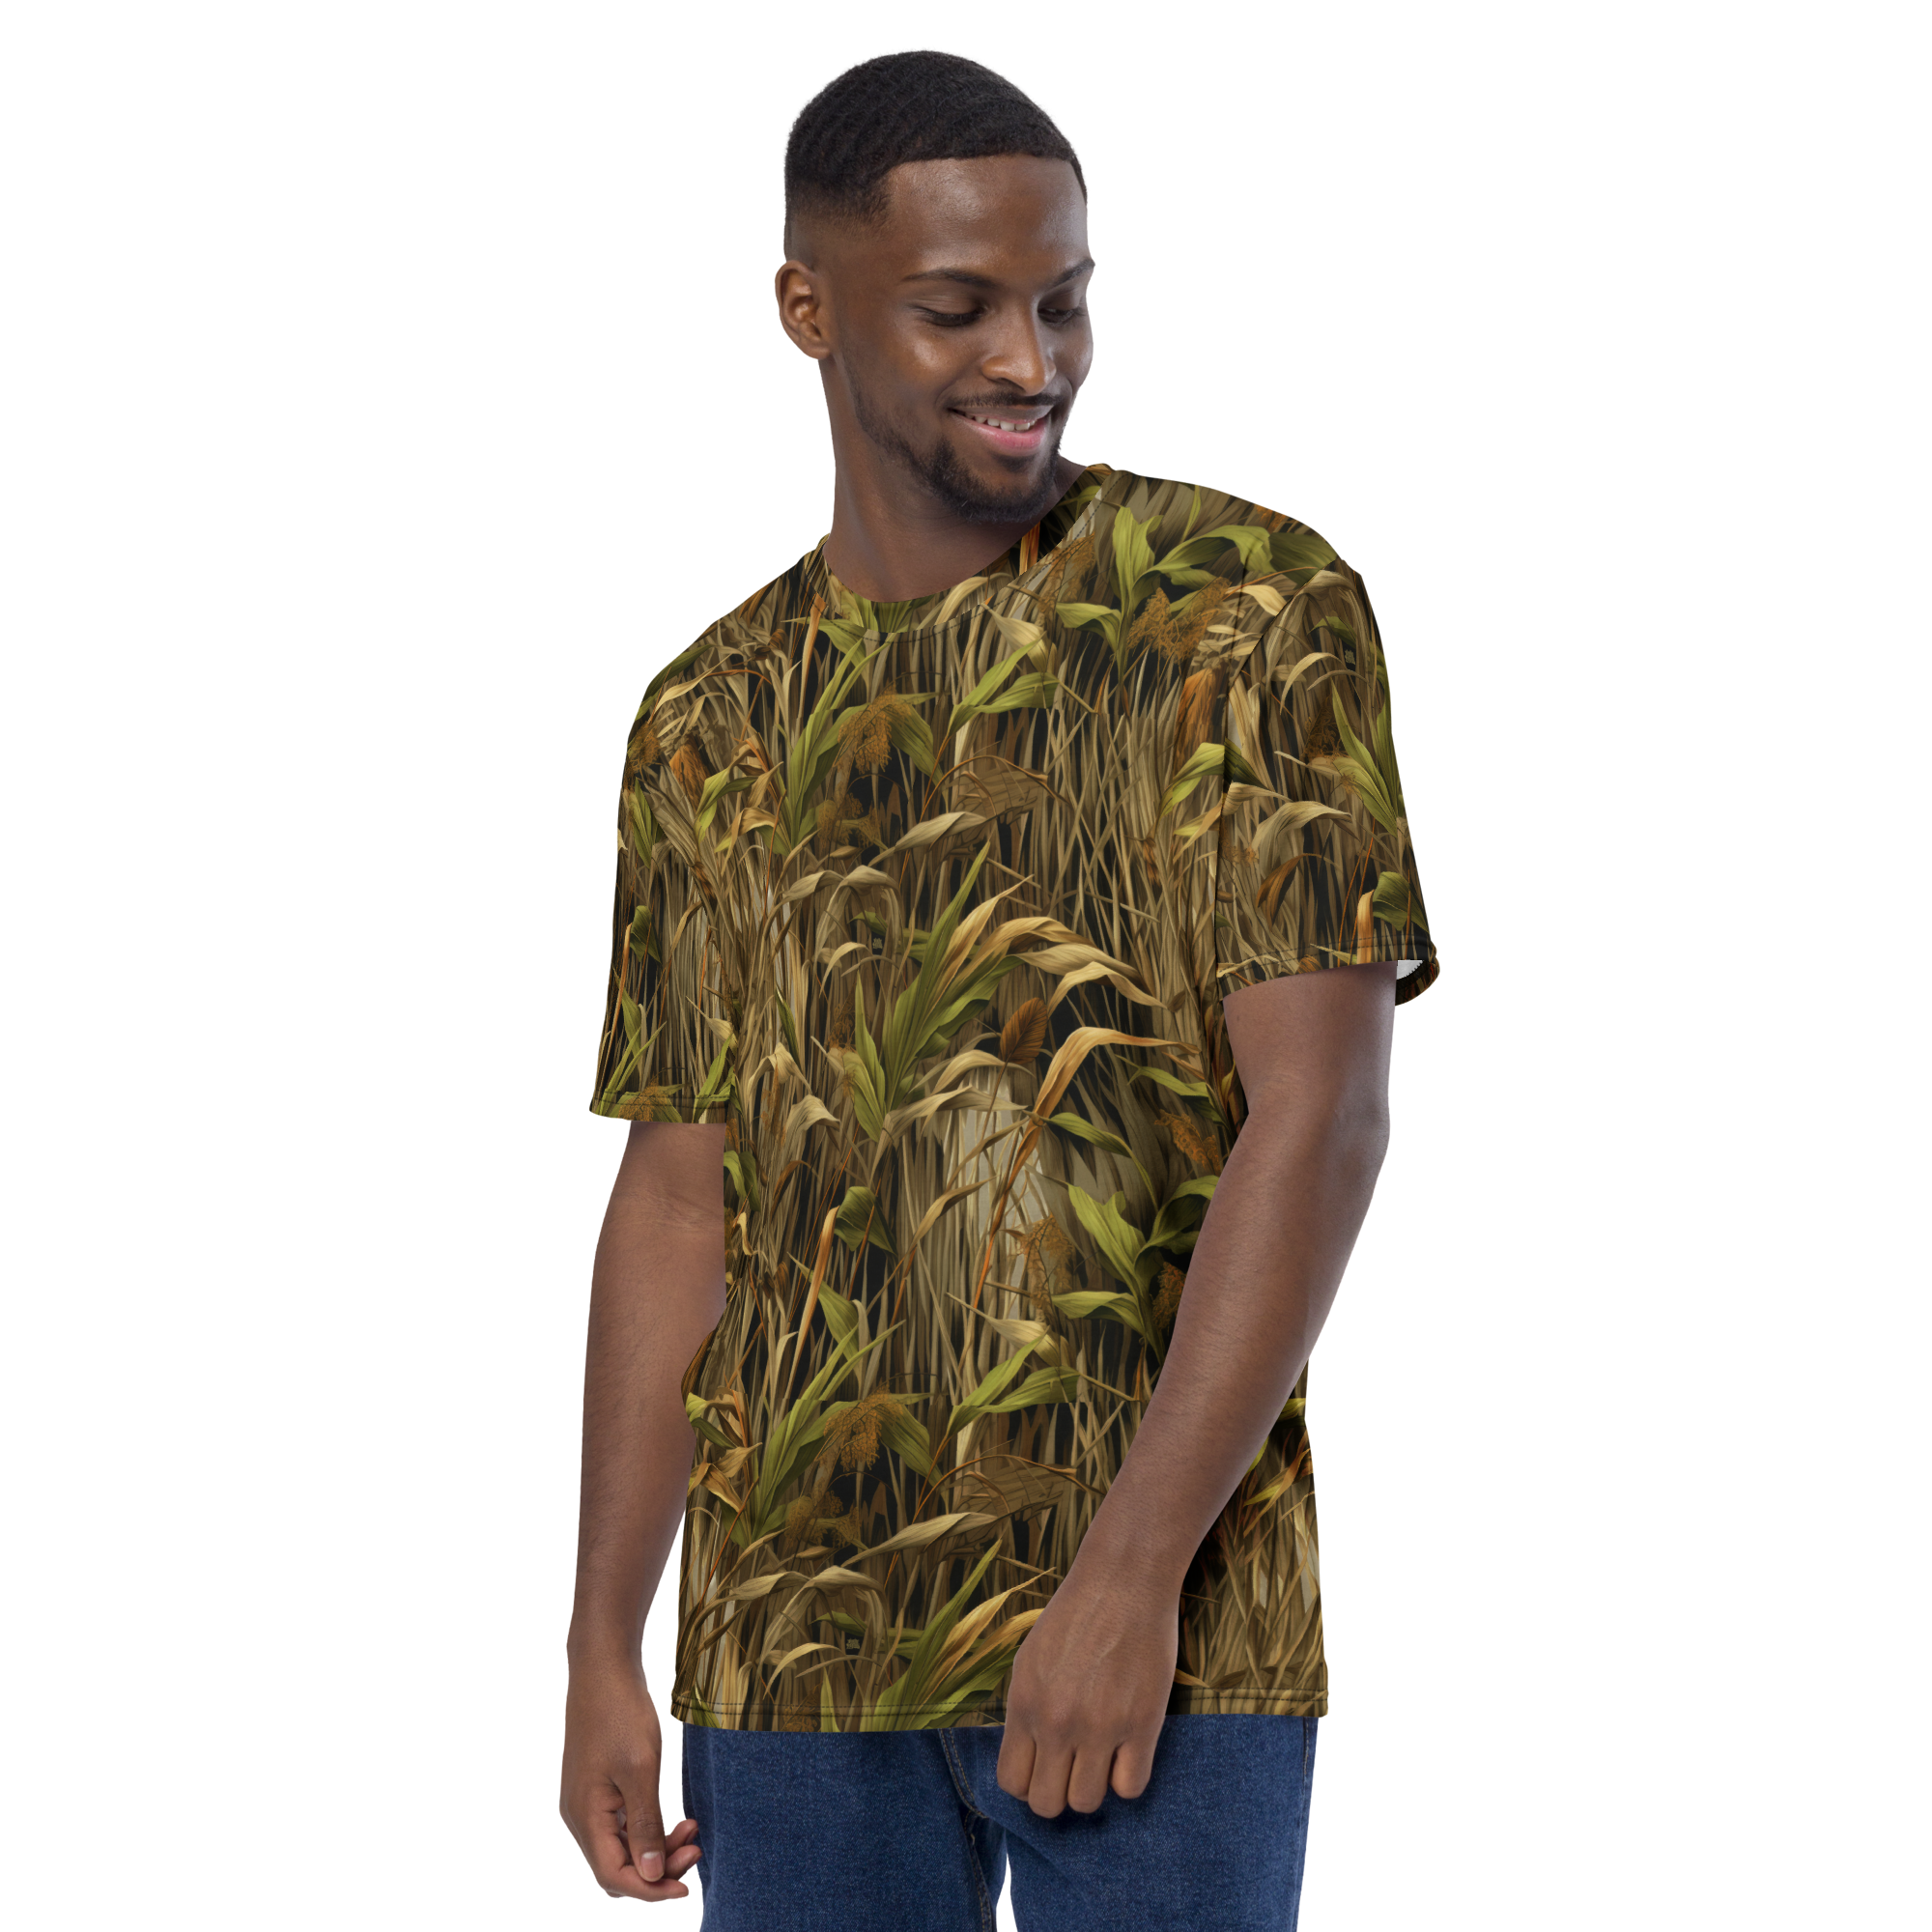 StealthBlend Camouflage Men's T-Shirt